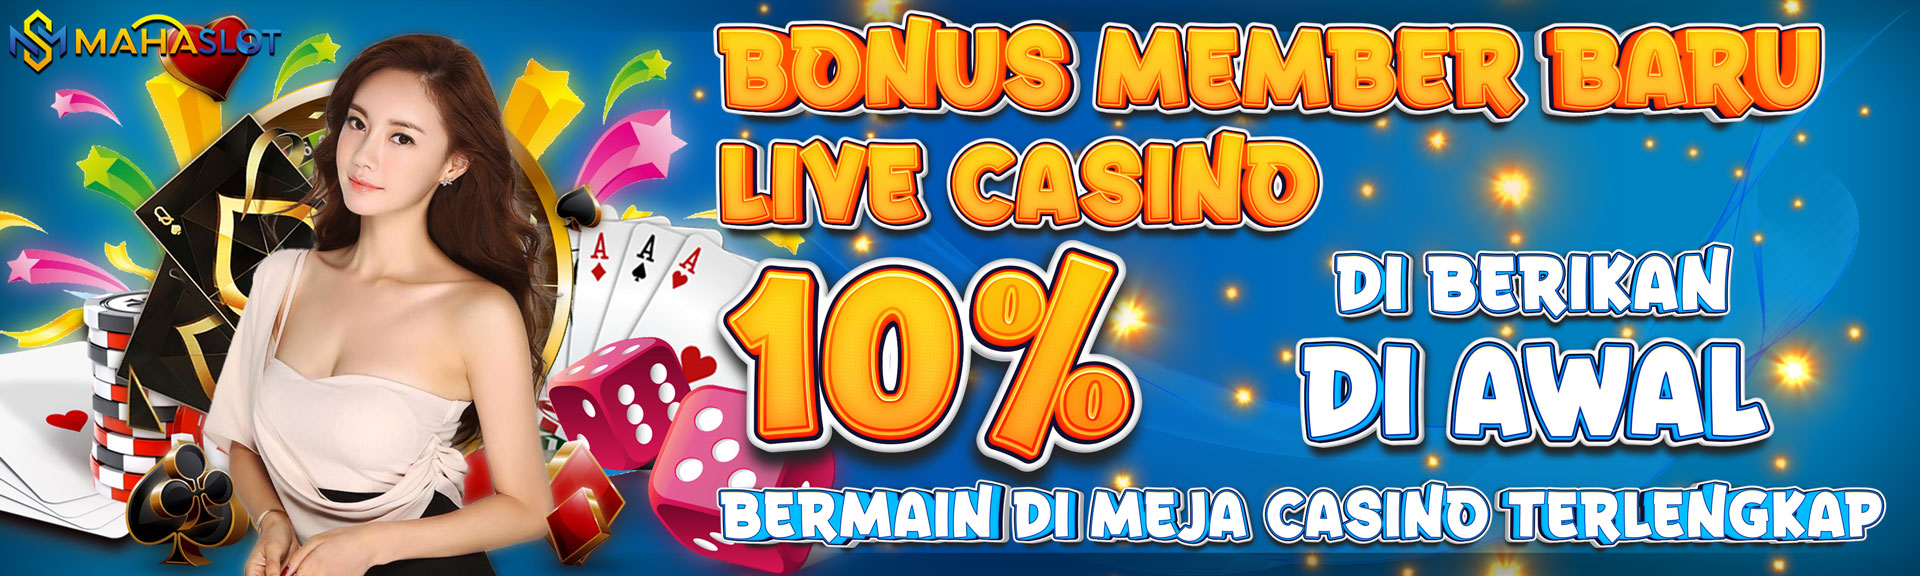 Bonus Live Casino 10%